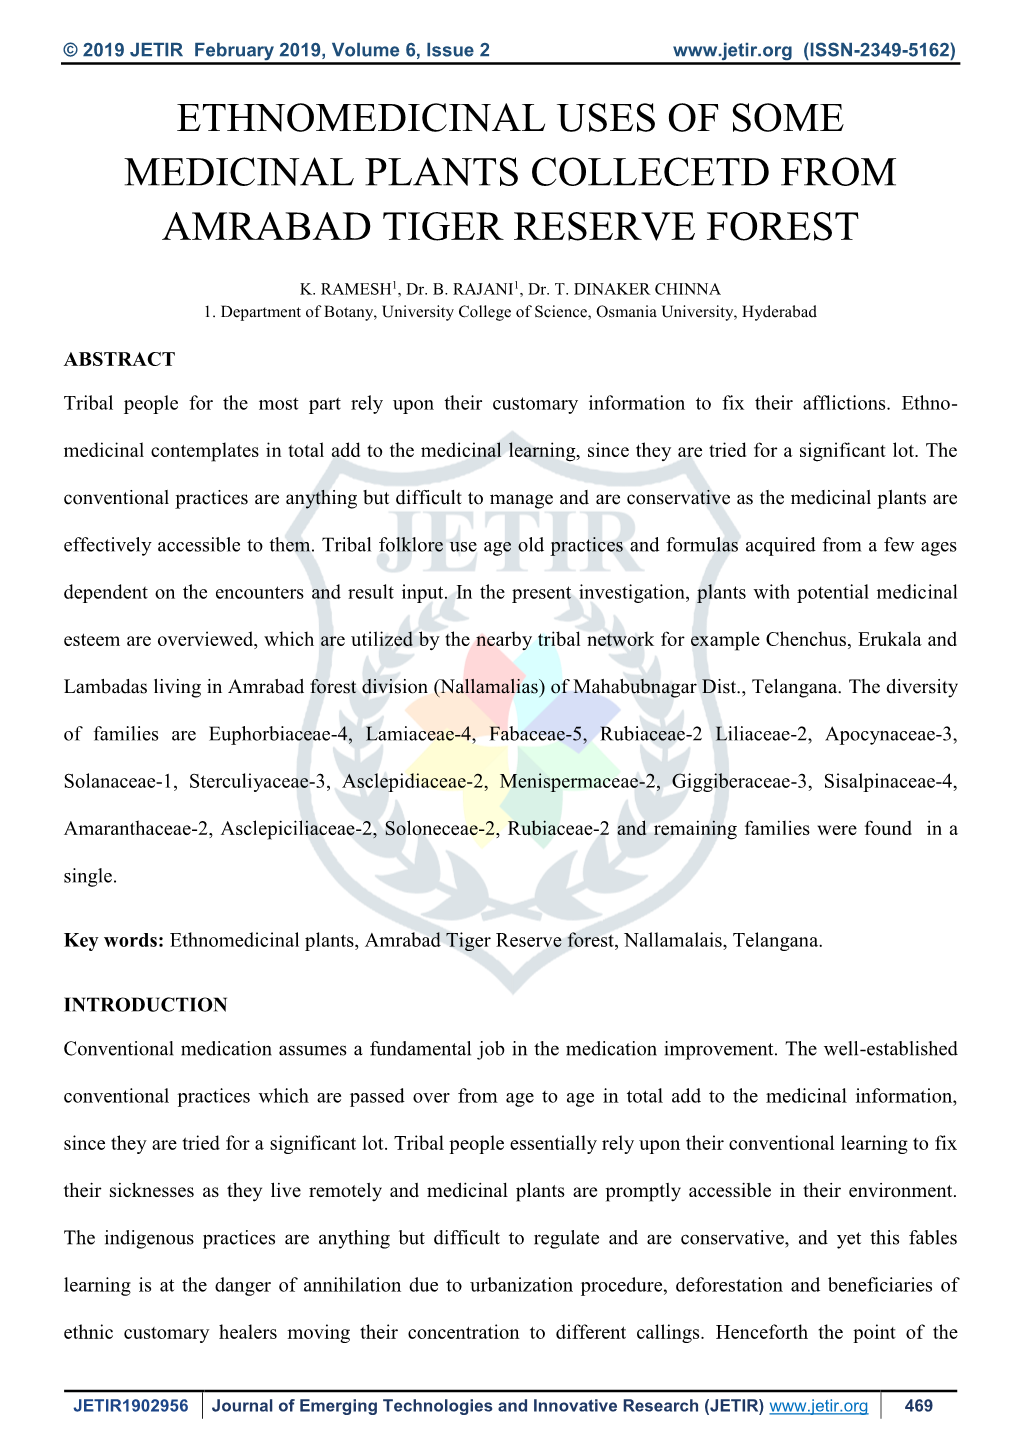 Ethnomedicinal Uses of Some Medicinal Plants Collecetd from Amrabad Tiger Reserve Forest